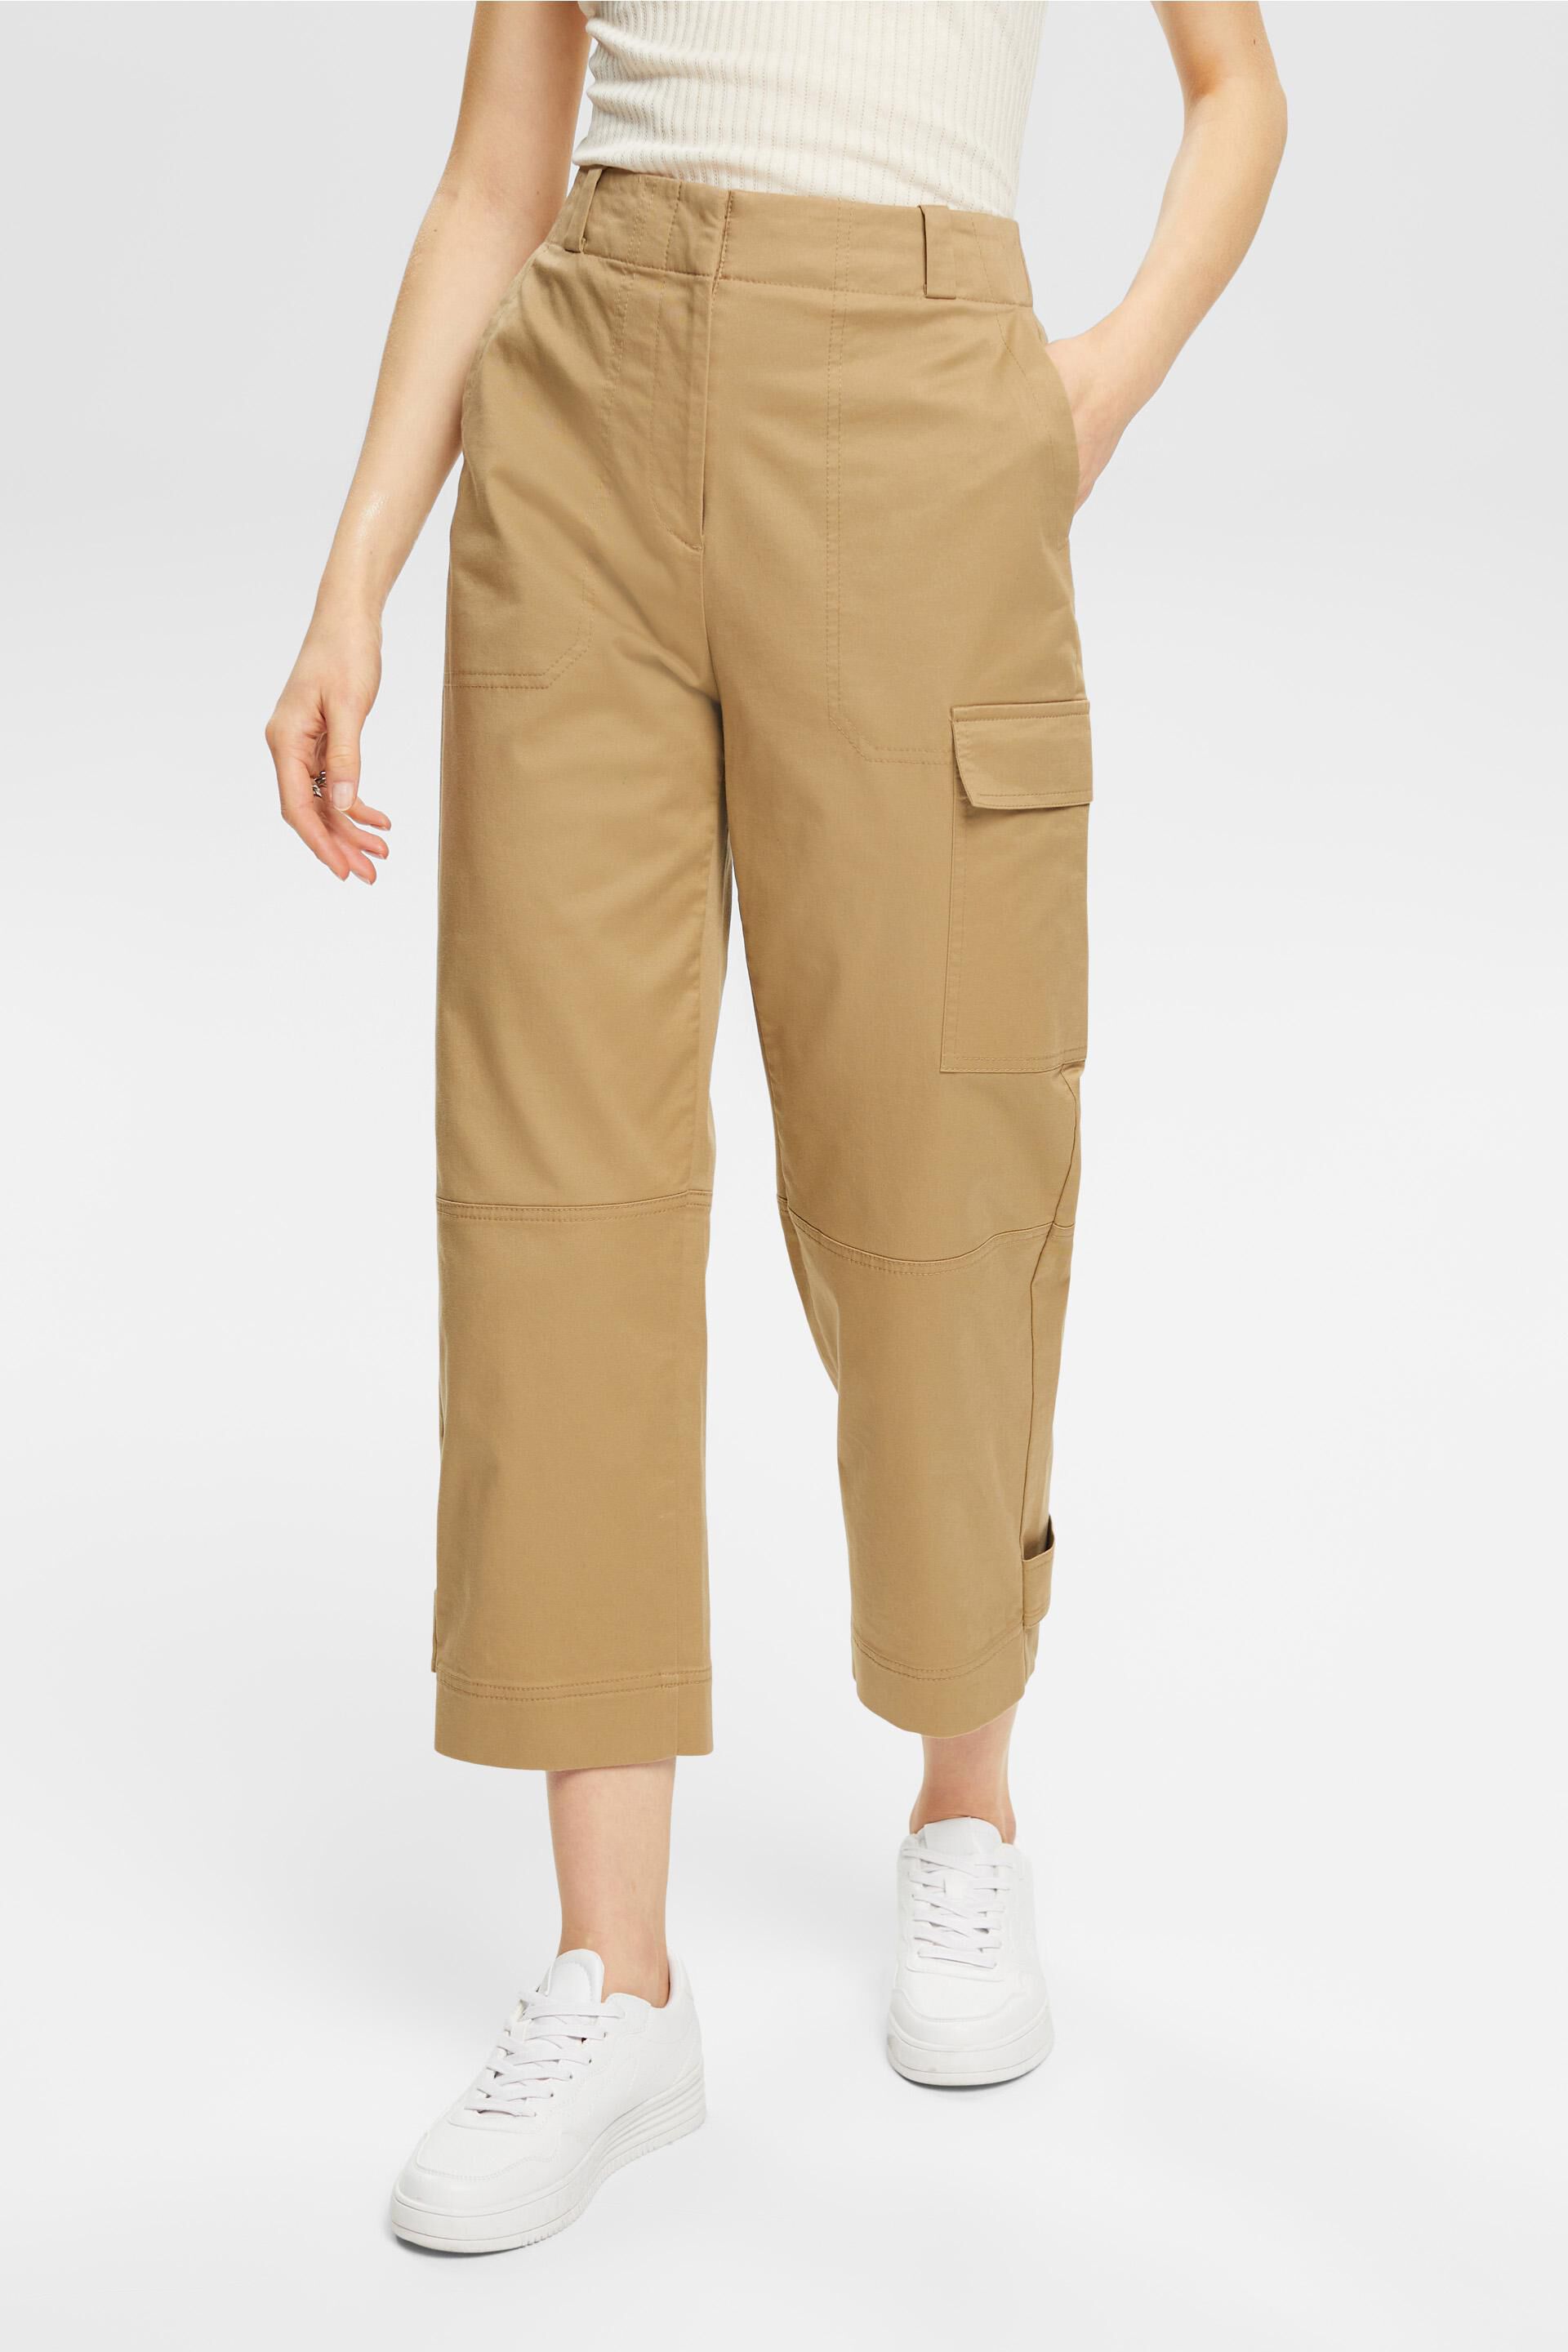 Juebong Men's and Big Men's Pants Outdoor Work Wear for Men Casual Button  Zip Camouflage Cargo Pants Sweatpants Cropped Trousers, Black,XXL -  Walmart.com